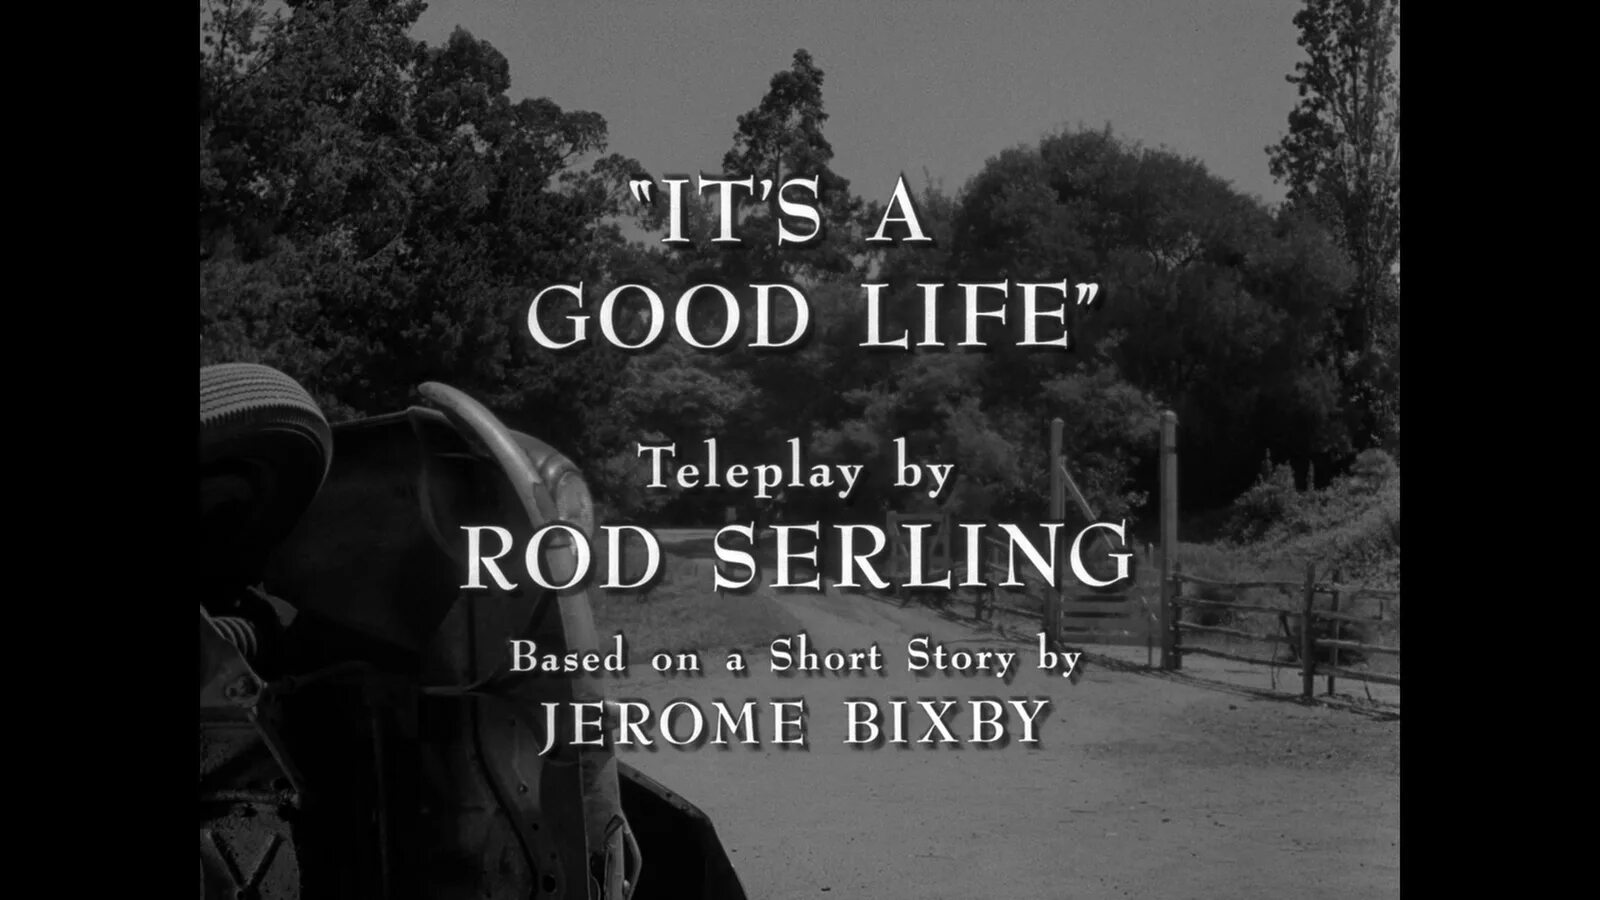 The good life found. Its a good Life Twilight Zone. Сумеречная жизнь. Good Life постеры. Record a good Life.